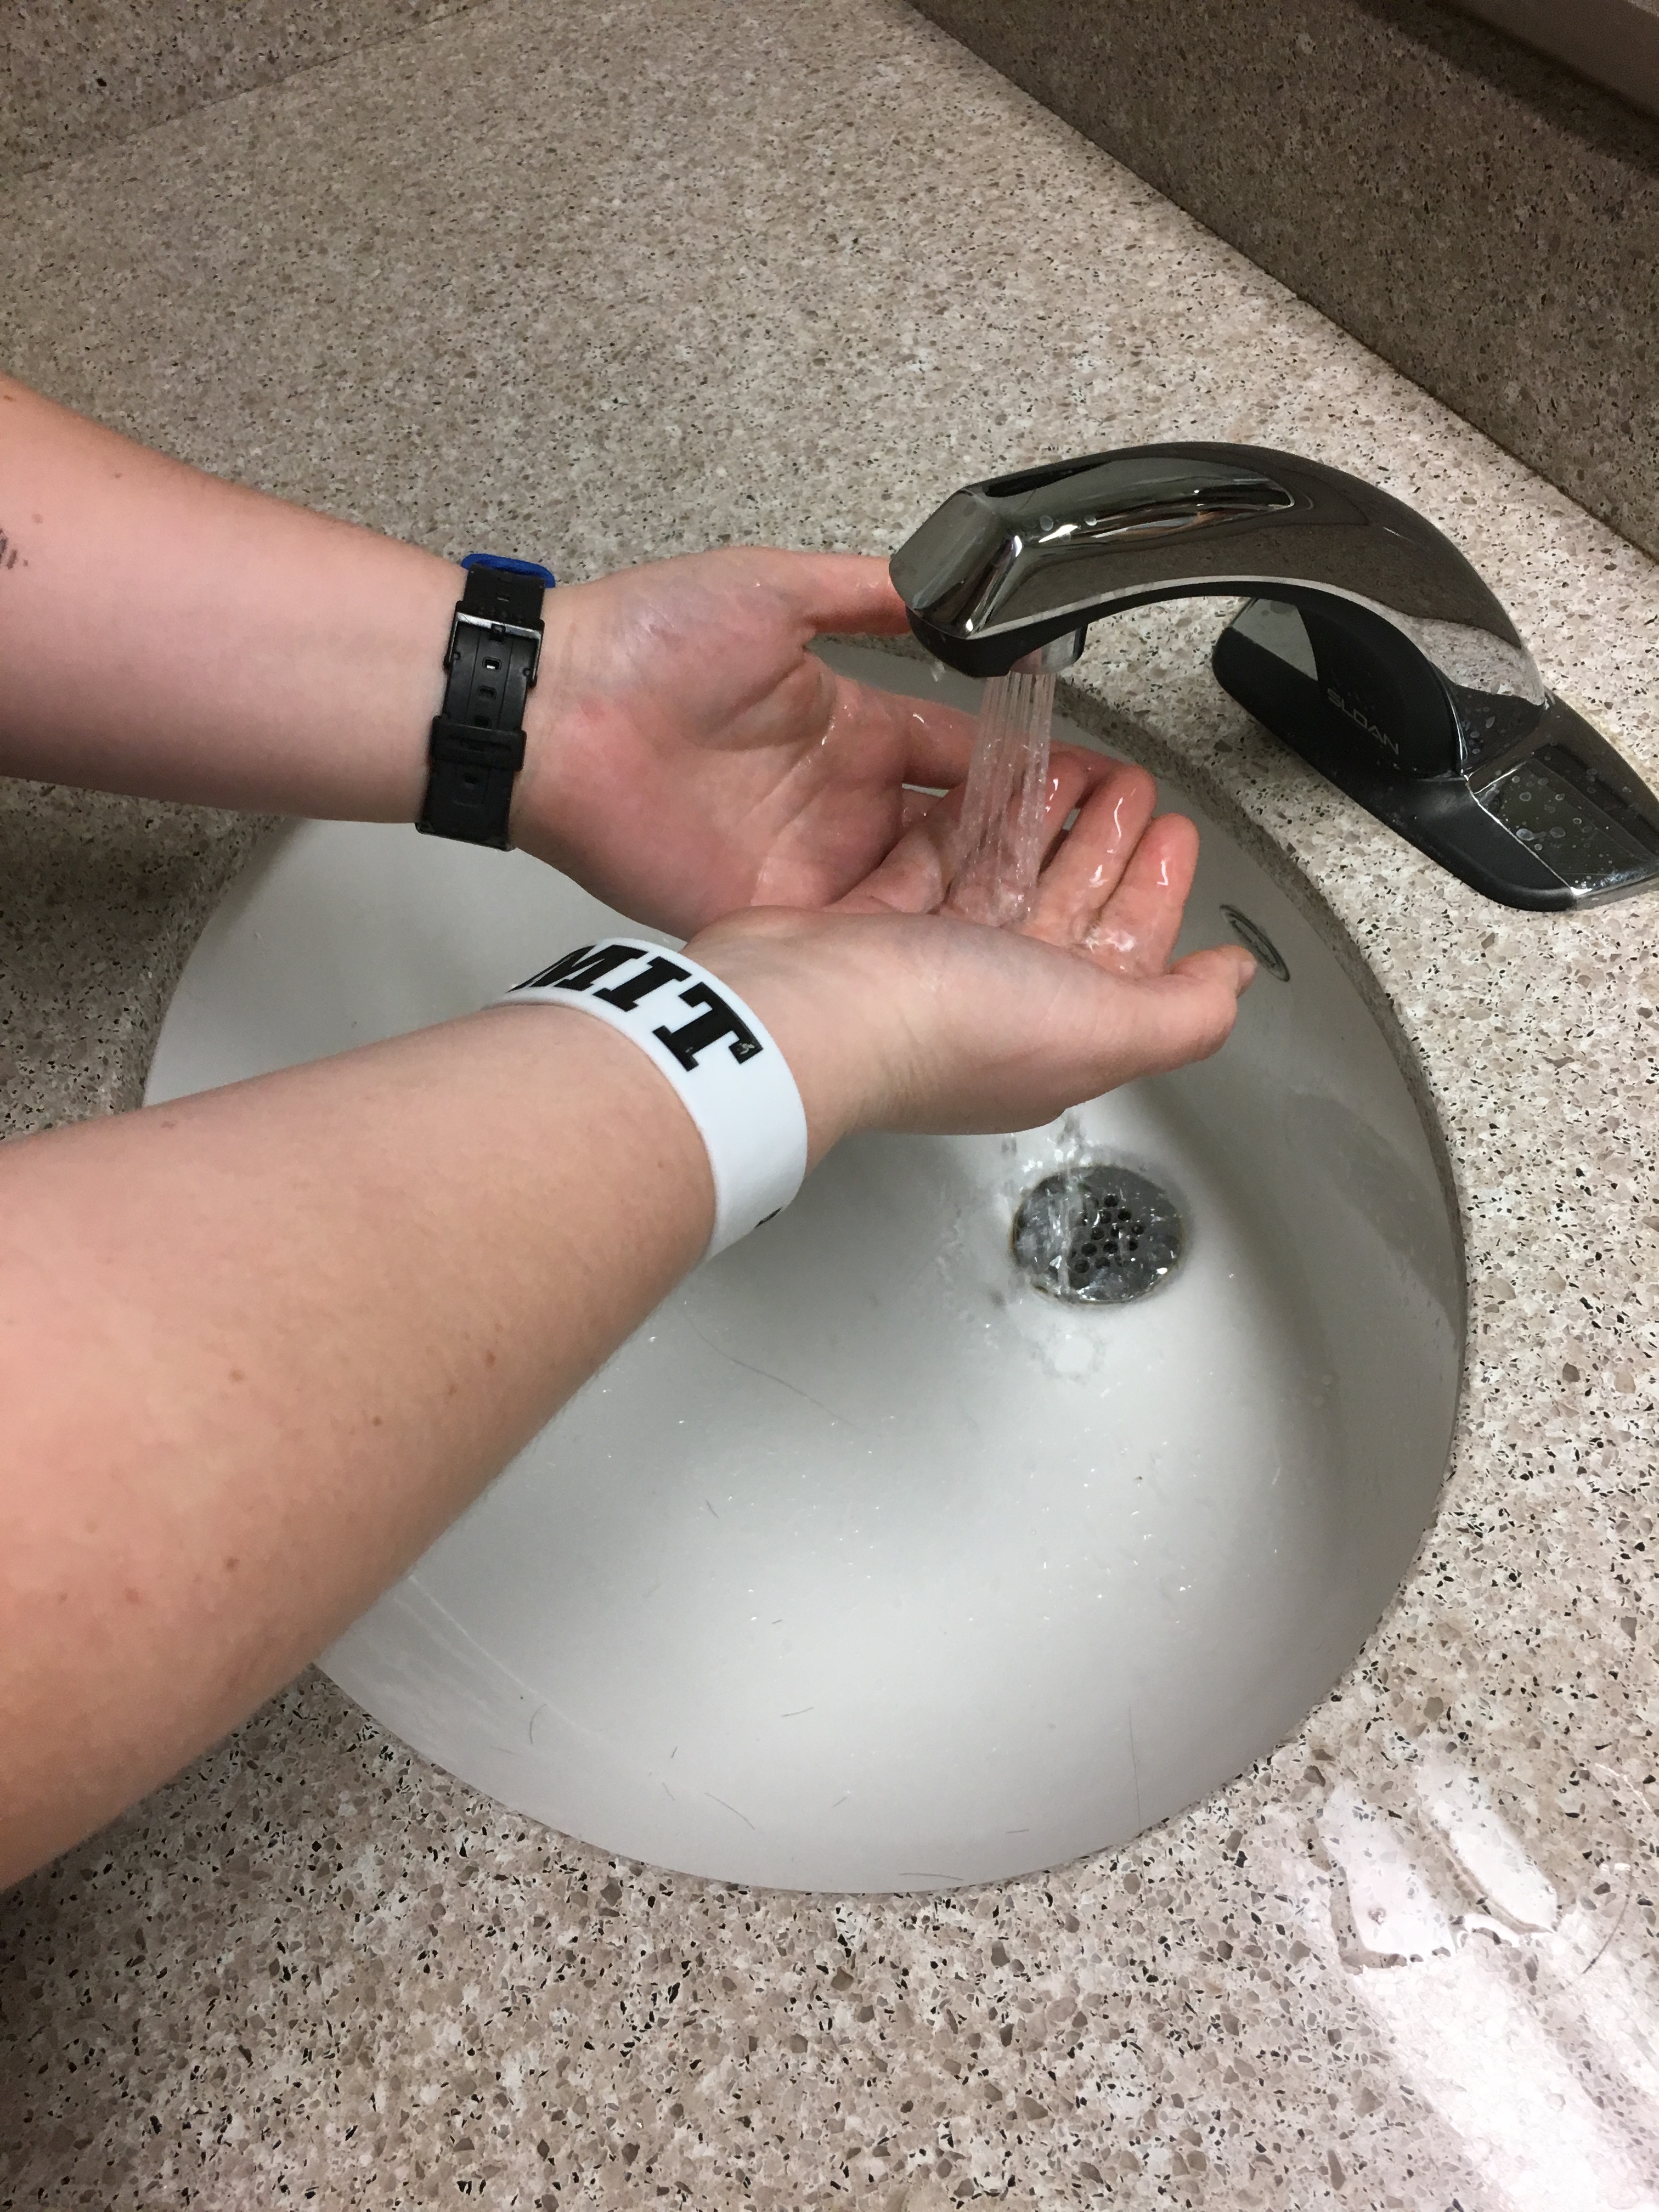 Washing My Hands